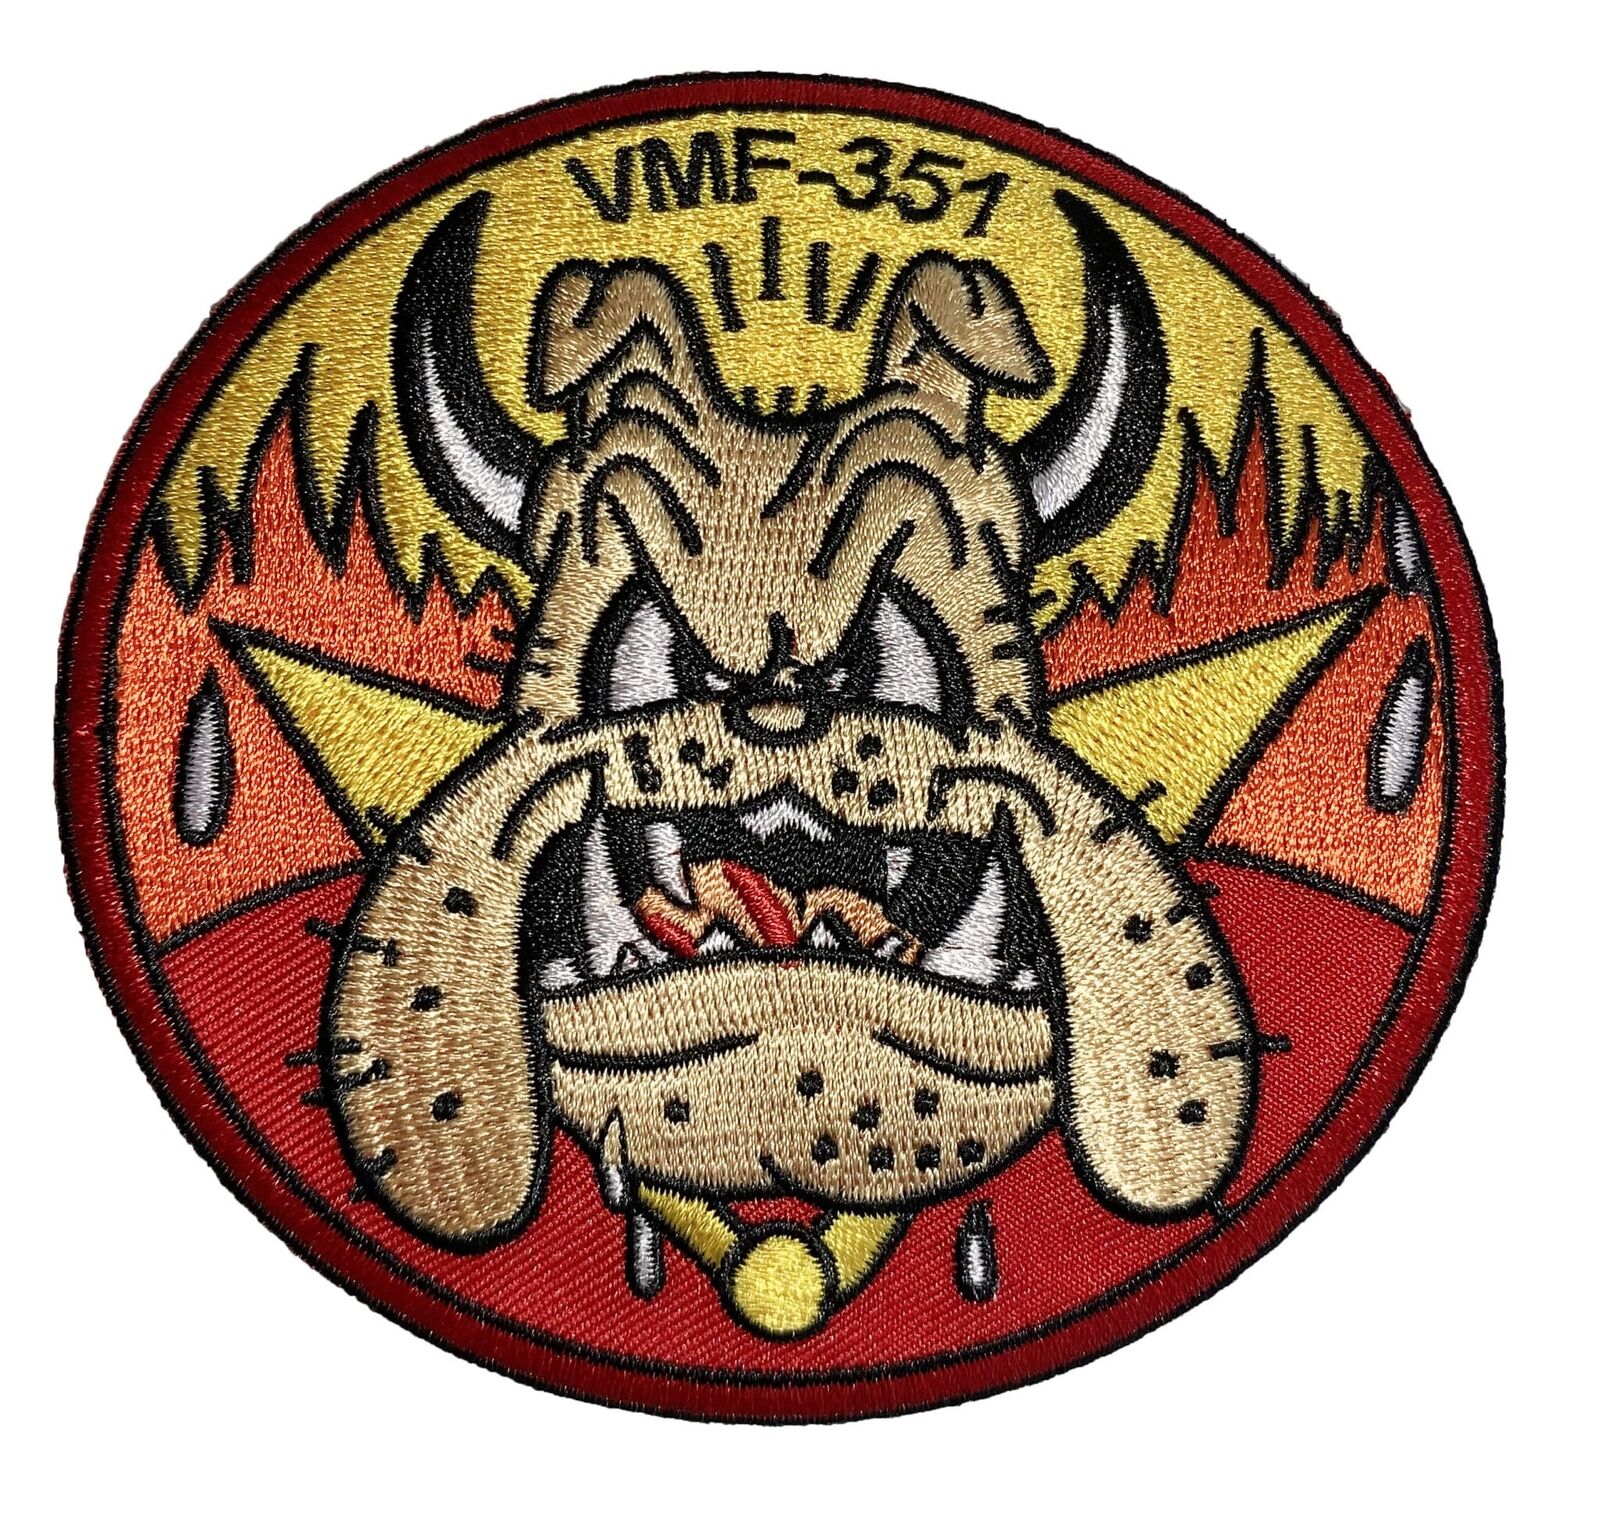 VMF-351 Original Devil Dog Squadron Patch – Sew On